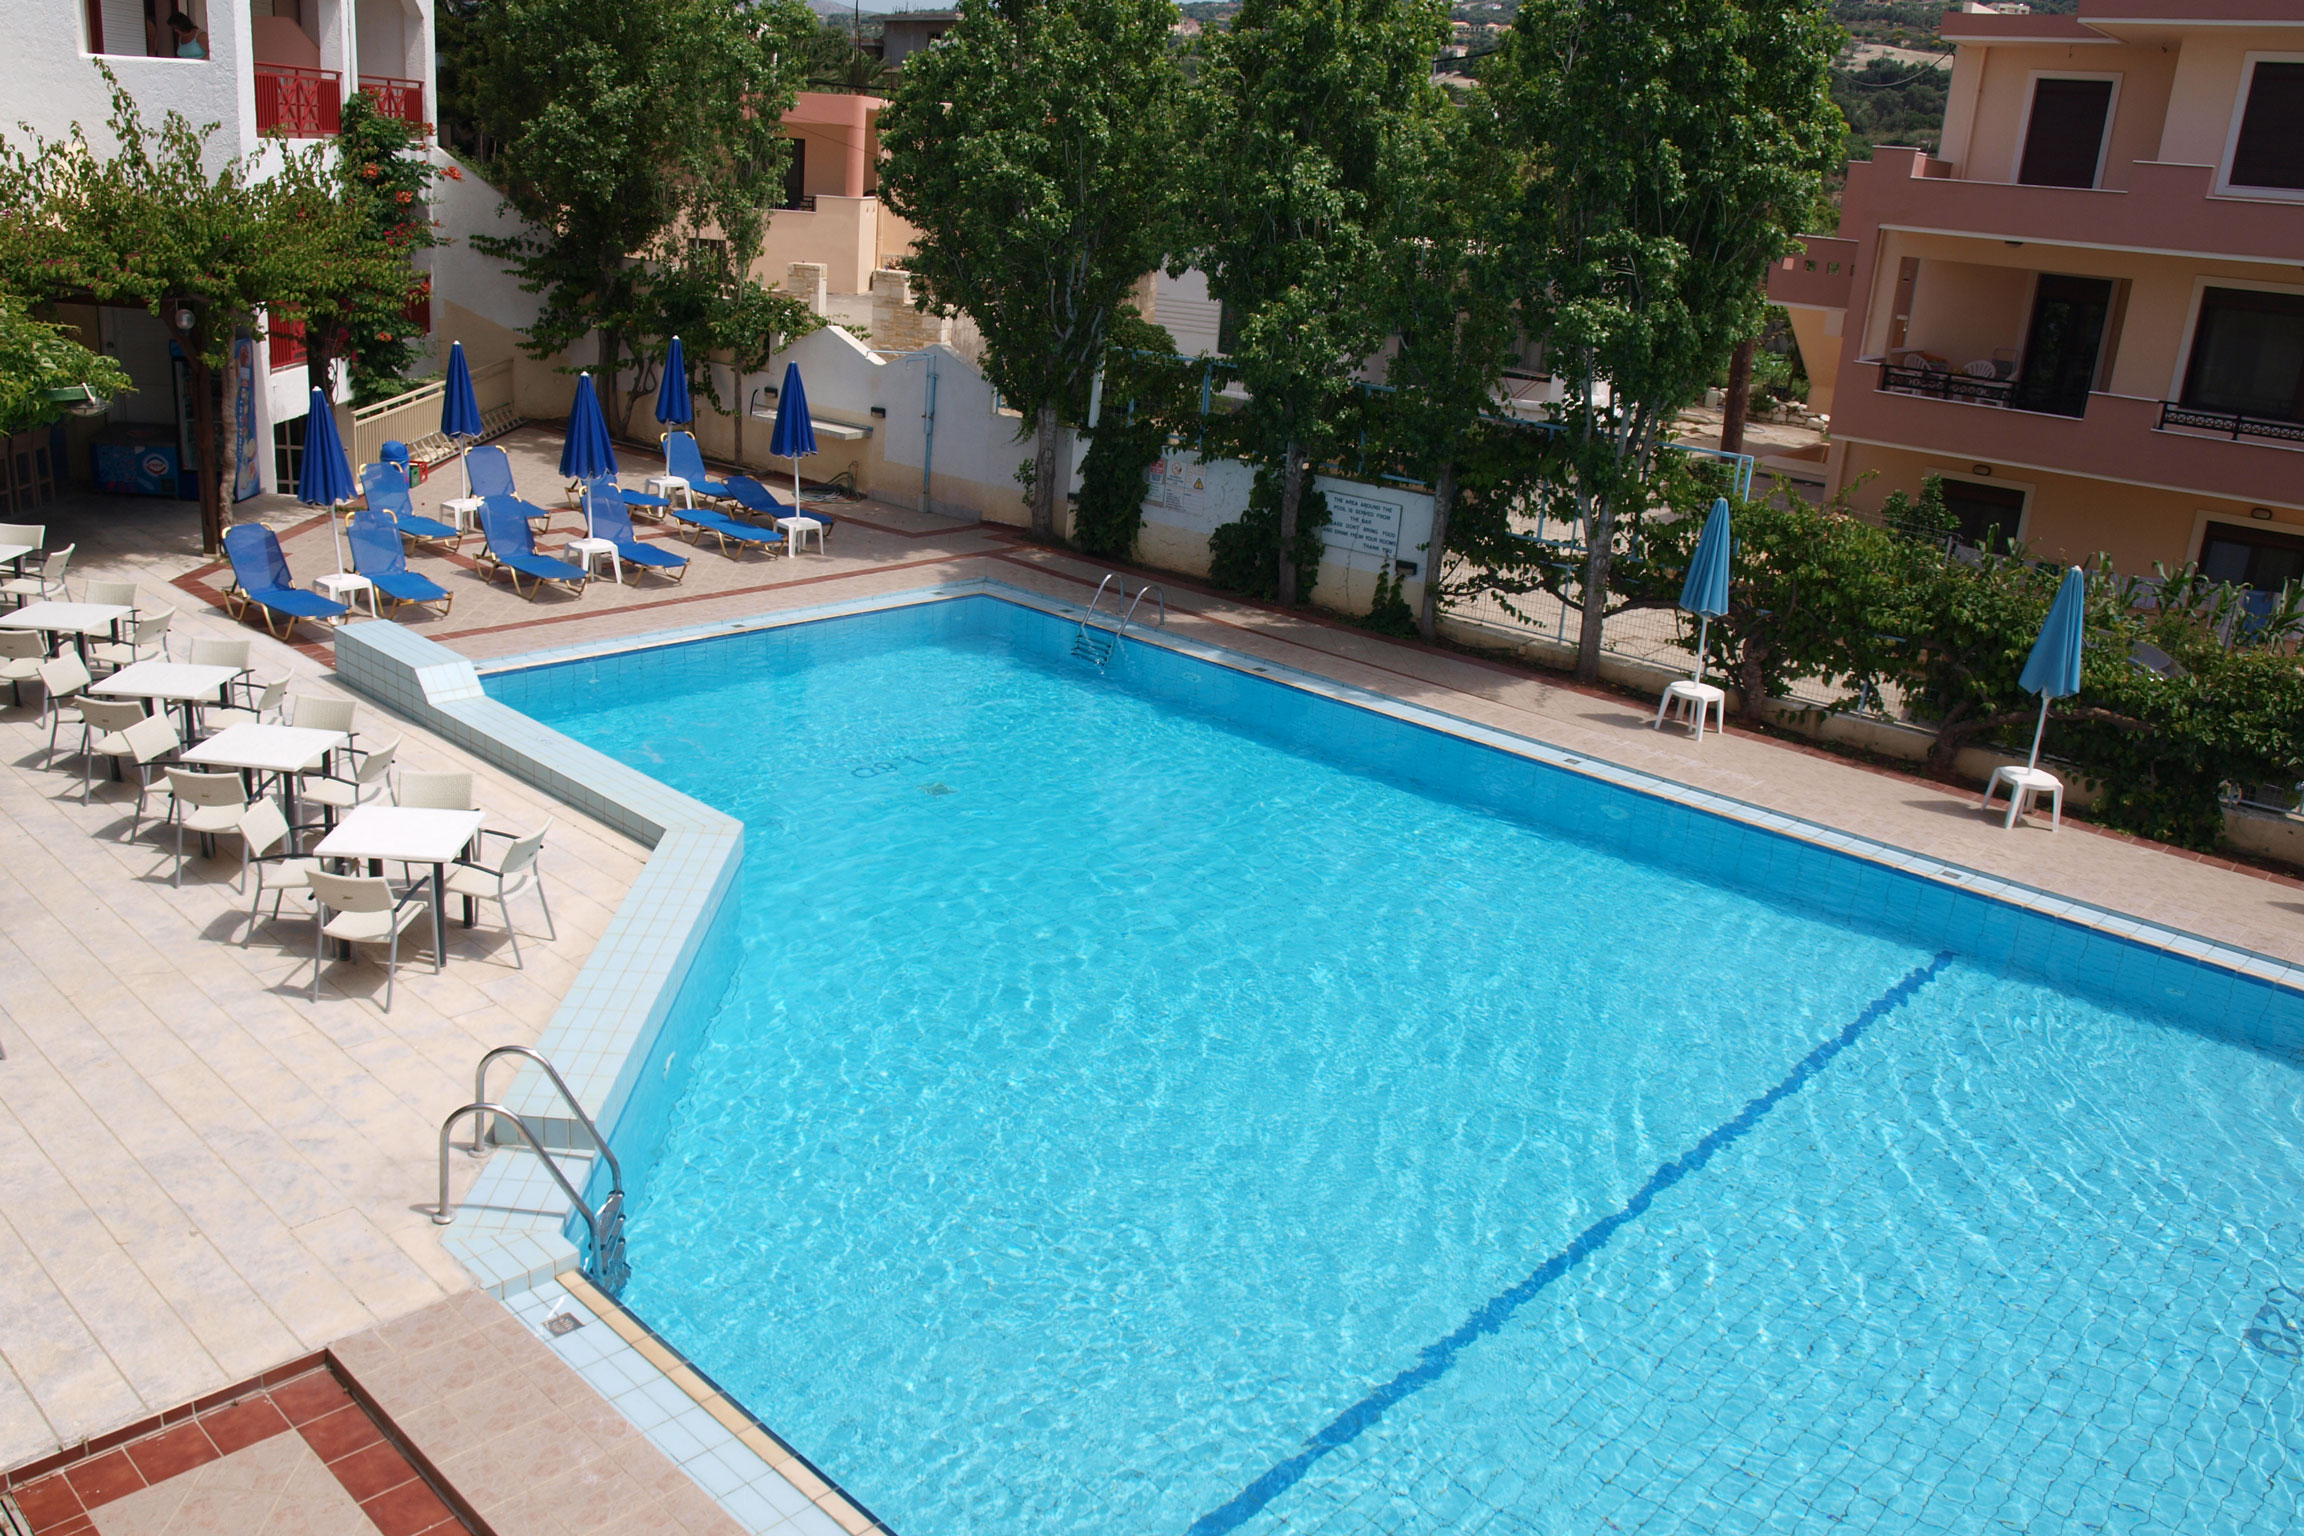 Apollon Hotel Apartments -Ρέθυμνο ✦ 3 Ημέρες (2 Διανυκτερεύσεις) ✦ 2 άτομα + 1 παιδί έως 12 ετών ✦ Χωρίς Πρωινό ✦ 01/05/2022 έως 30/09/2022 ✦ Υπέροχη Τοποθεσία!